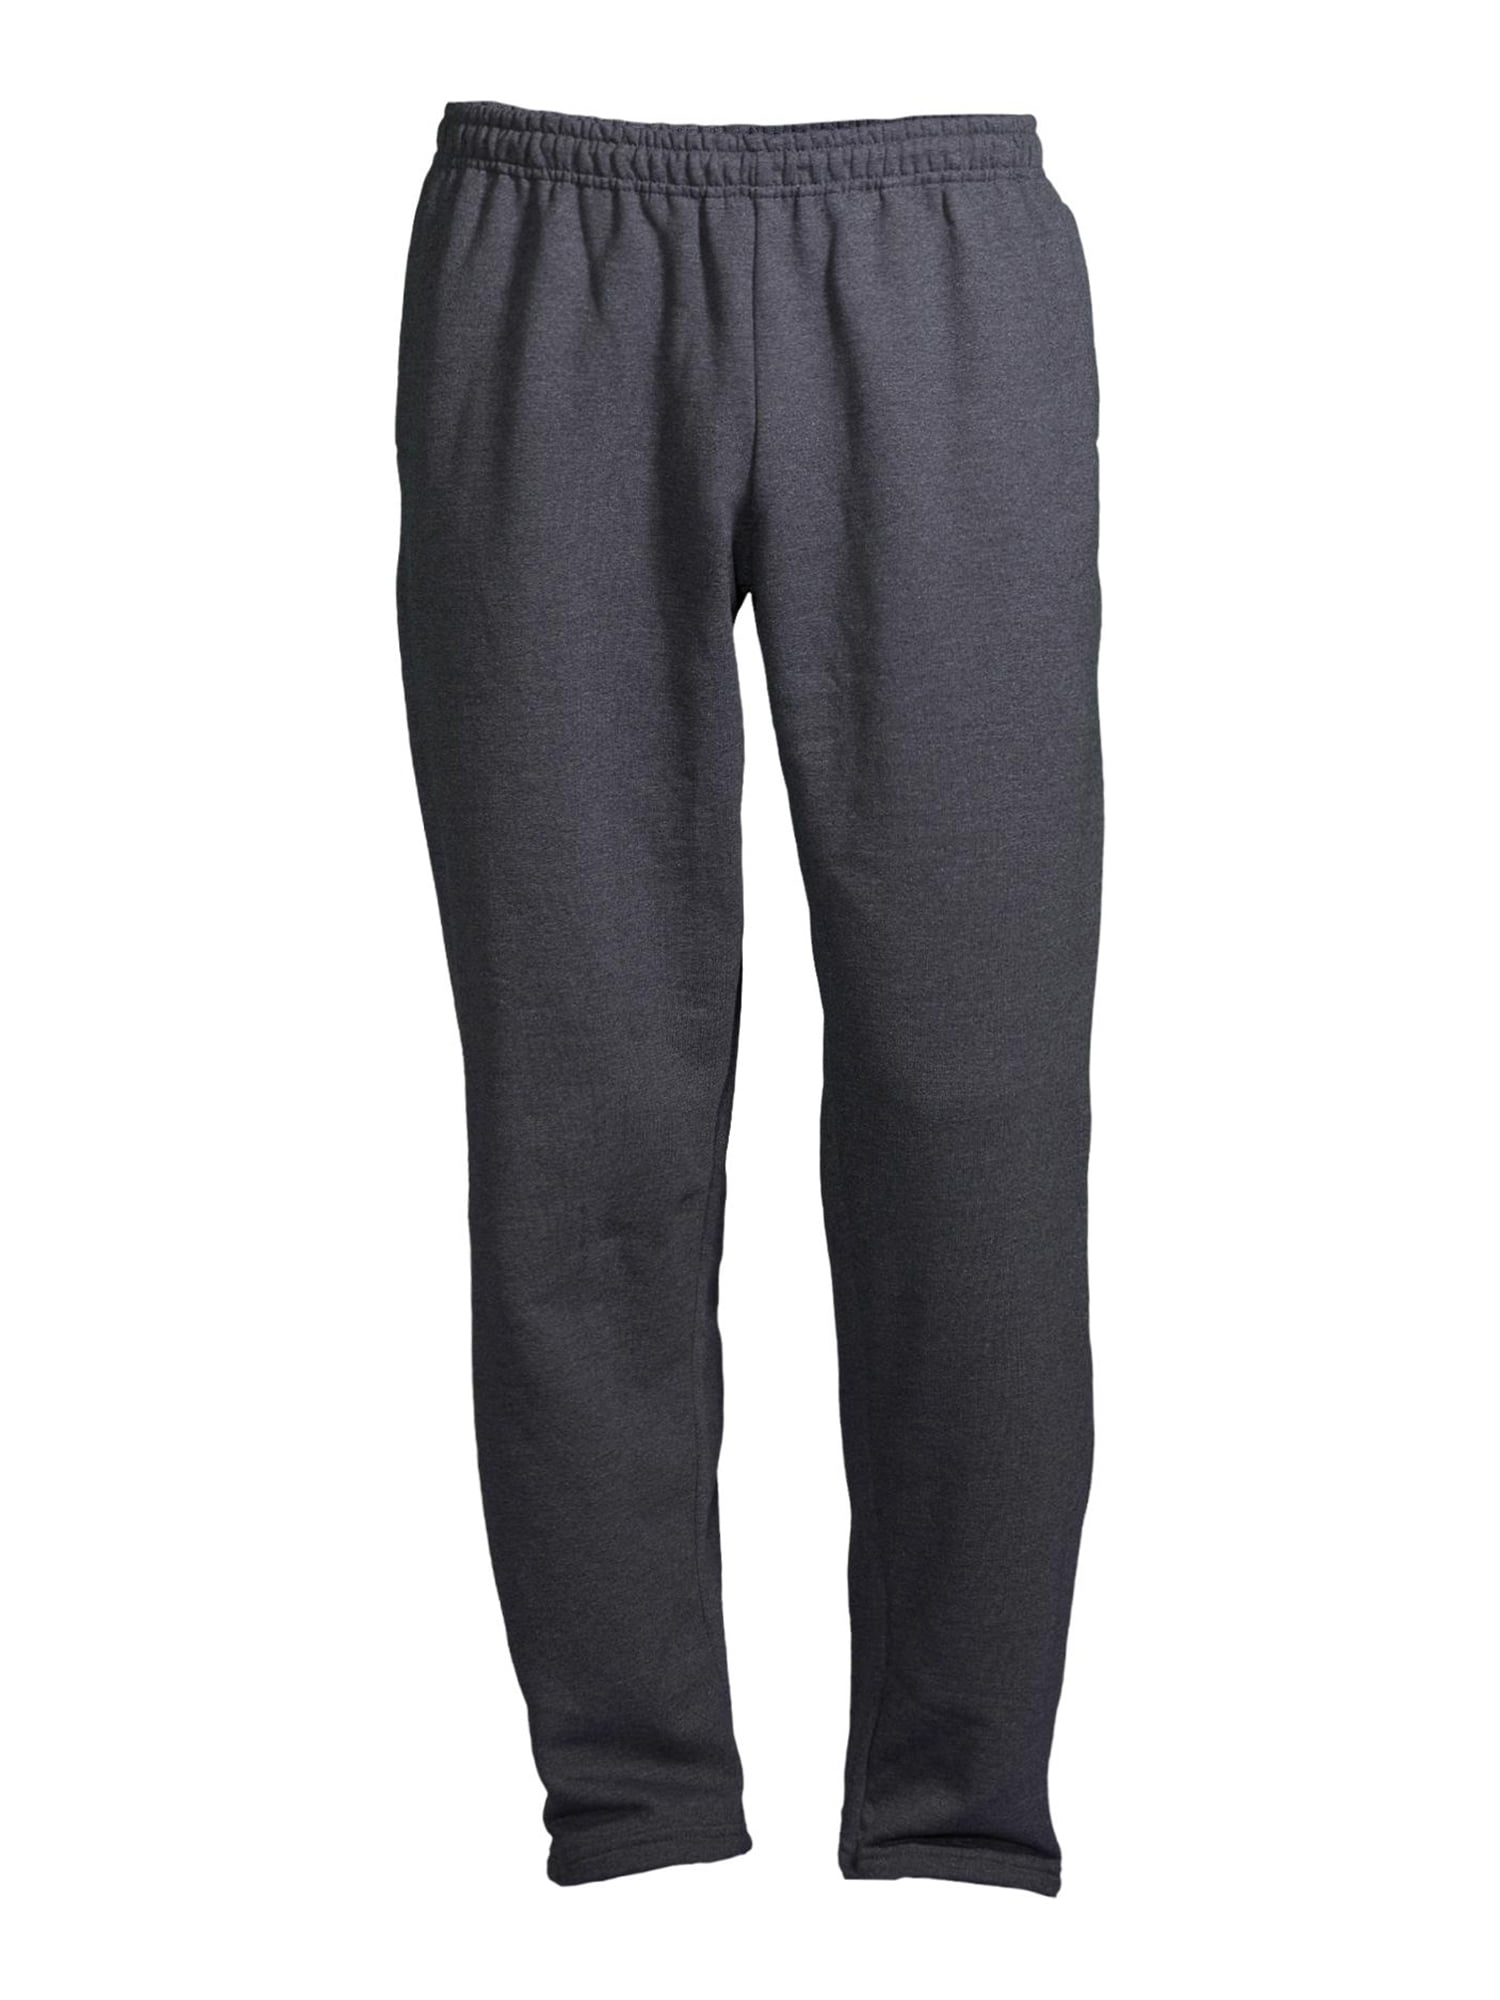 GetUSCart- Gildan Men's Fleece Open Bottom Pocketed Pant, Navy, Large